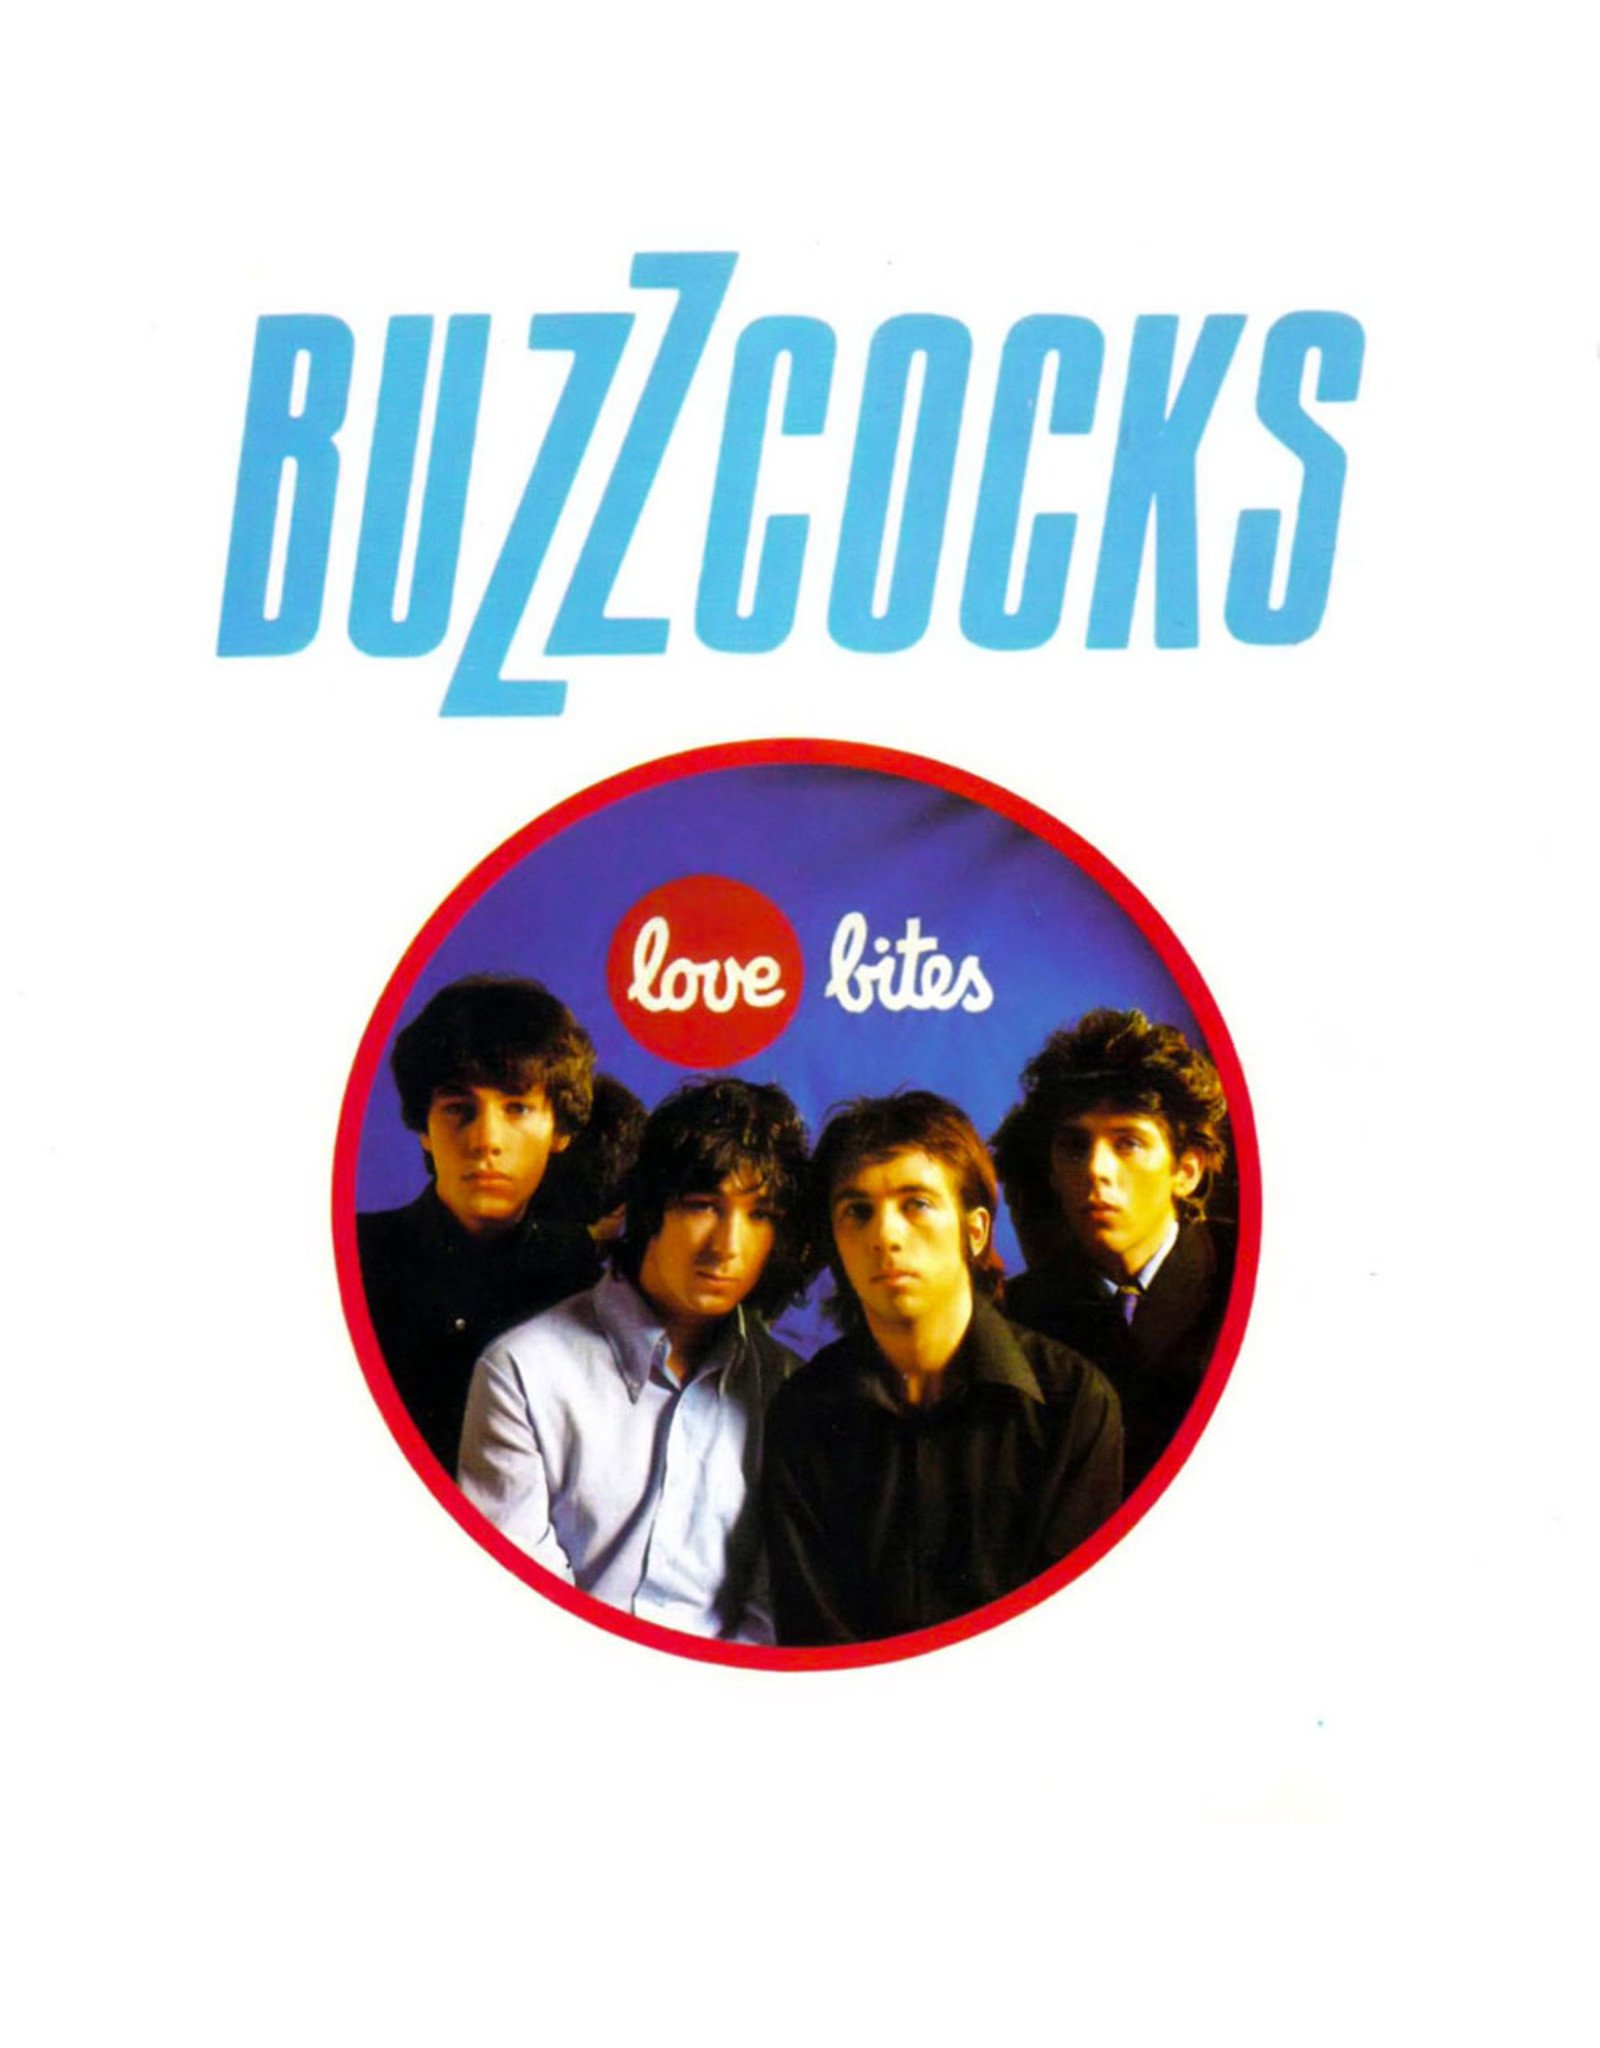 Buzzcocks - Love Bites (2019 Remaster)